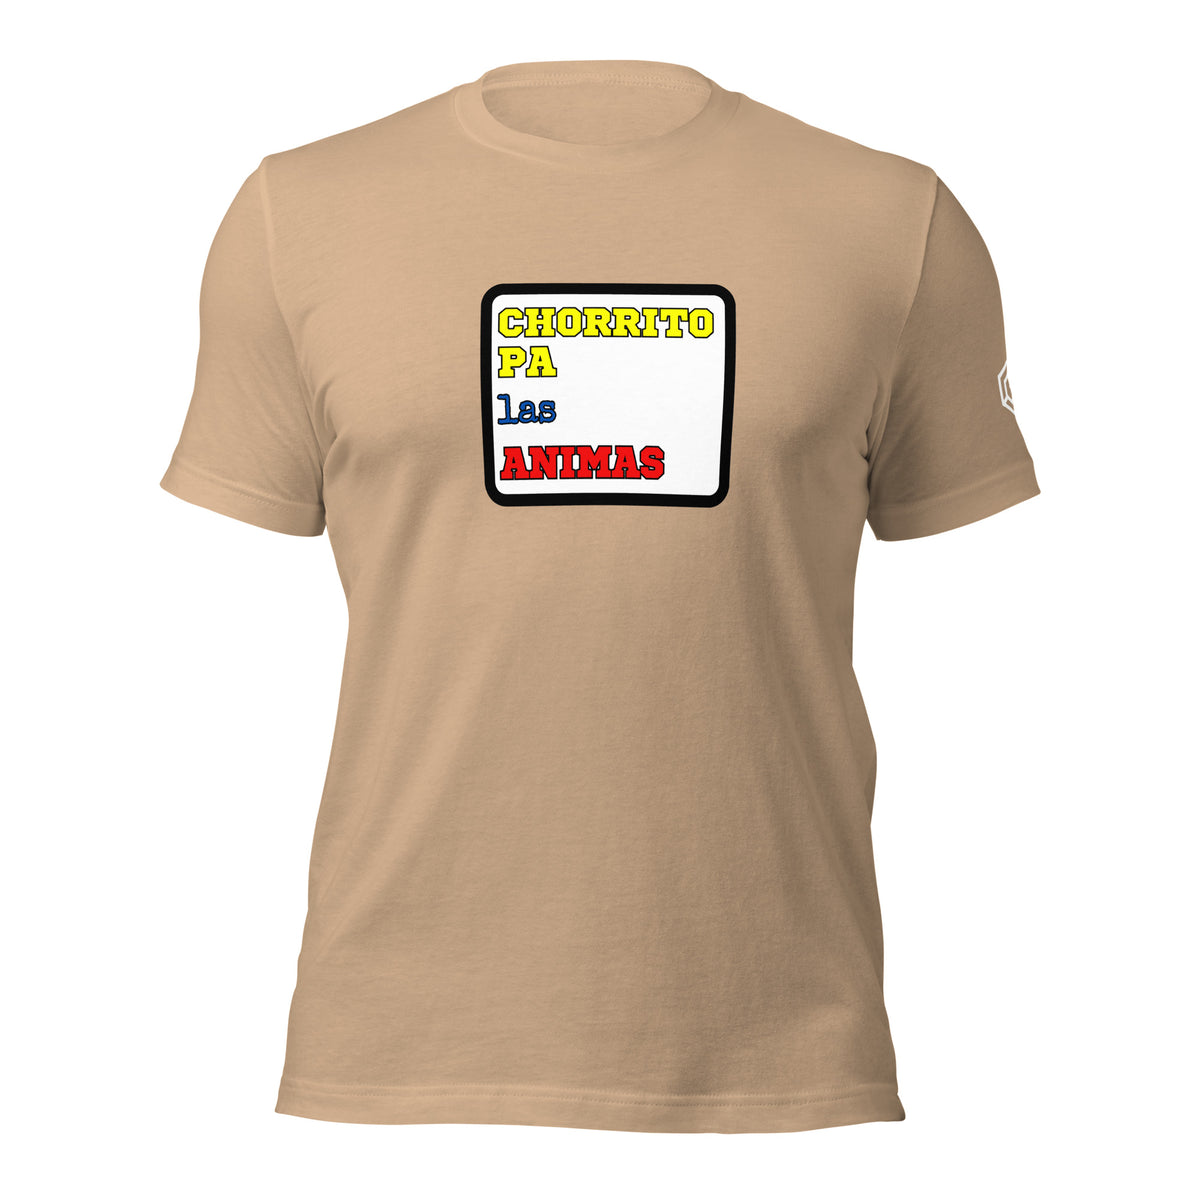 "CHORRITO PA LAS ANIMAS" Unisex t-shirt